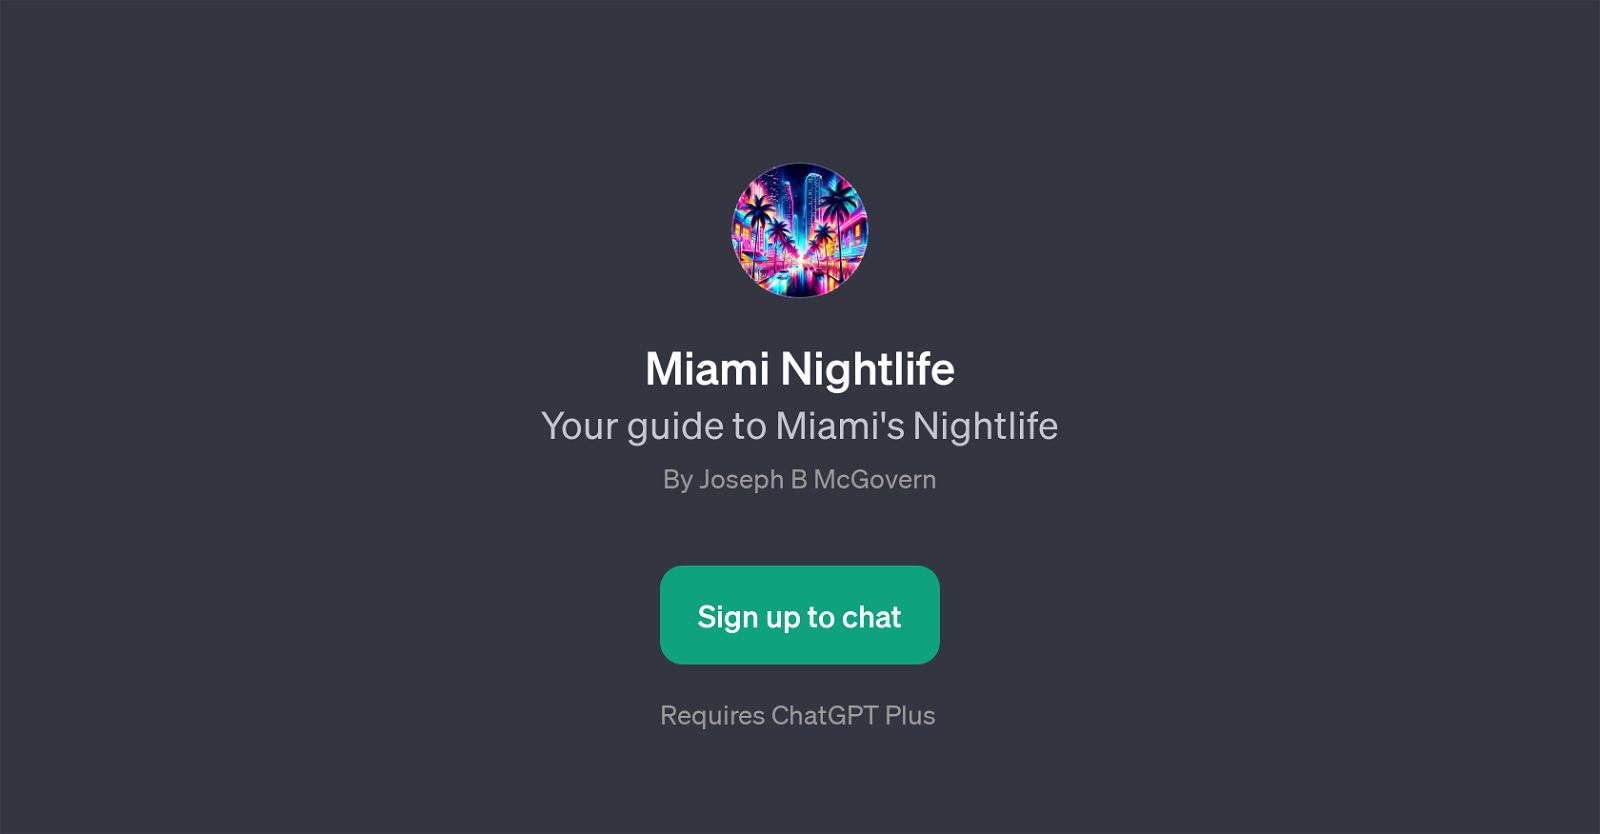 Miami Nightlife website